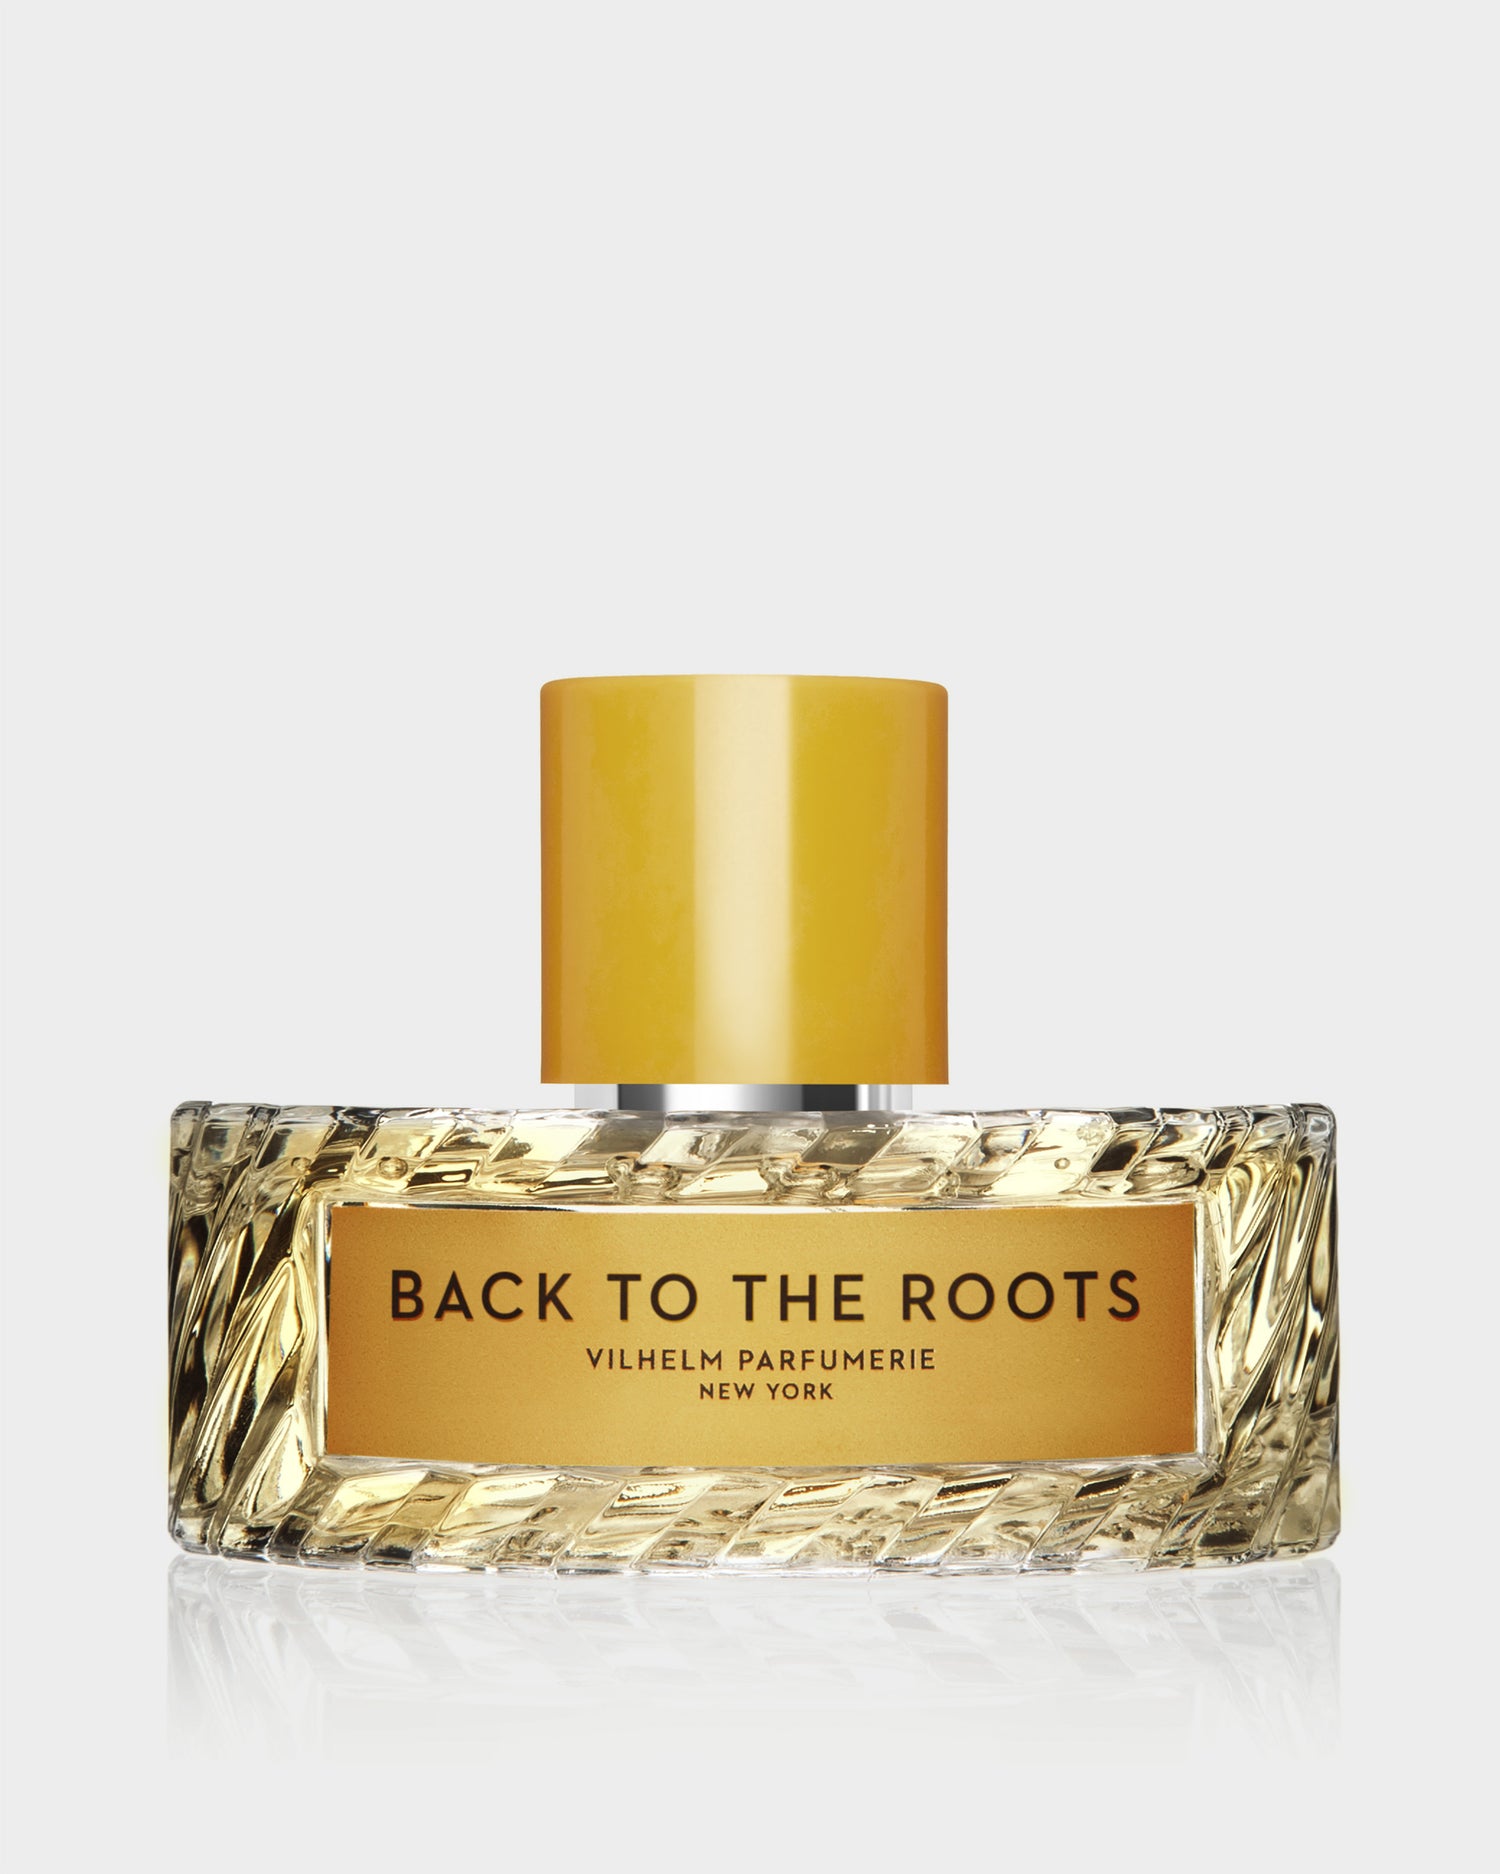 BACK TO THE ROOTS - Vilhelm Parfumerie